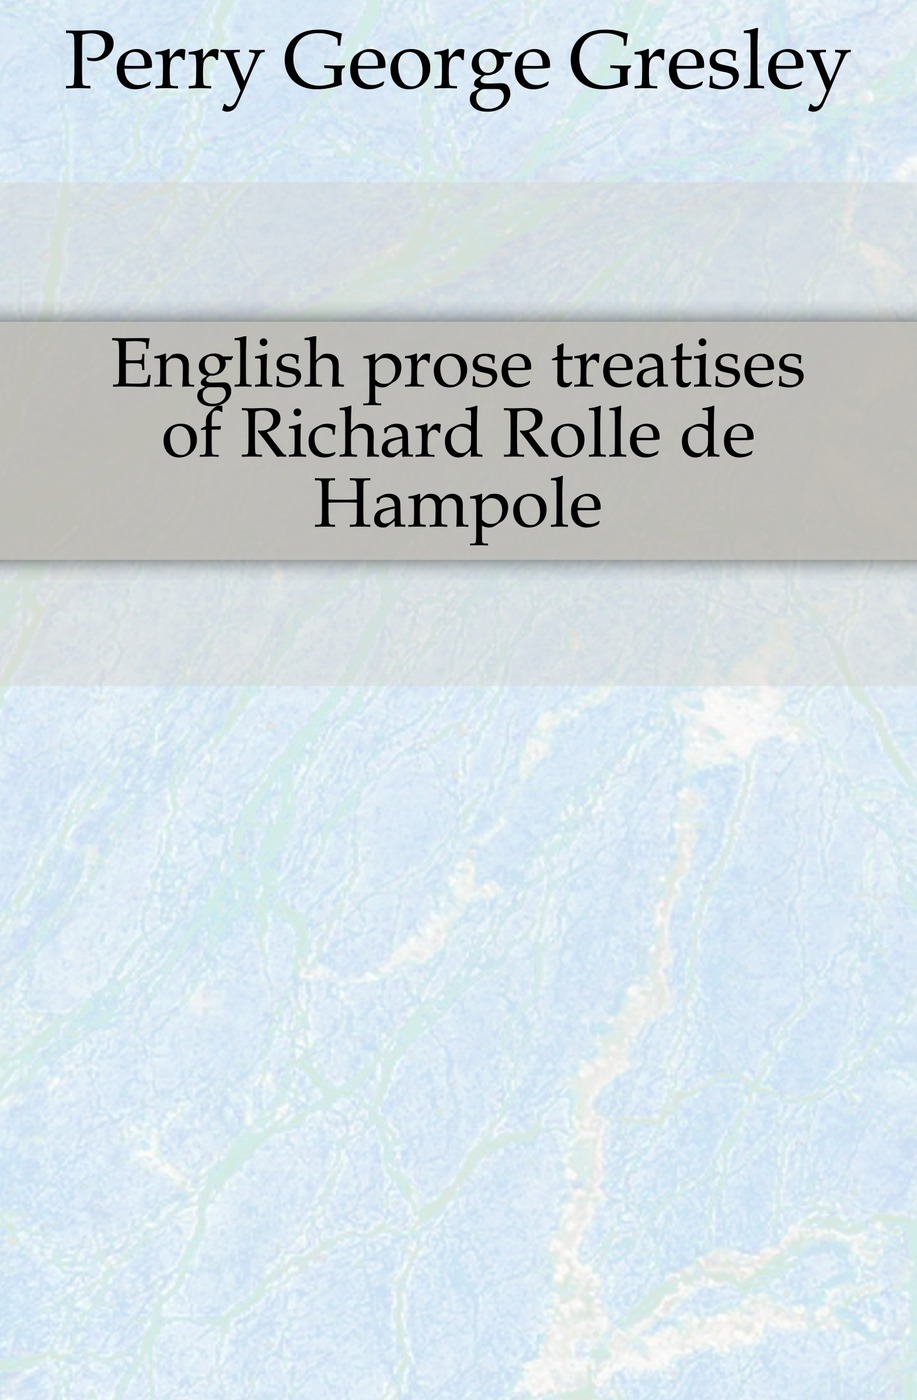 English prose treatises of Richard Rolle de Hampole